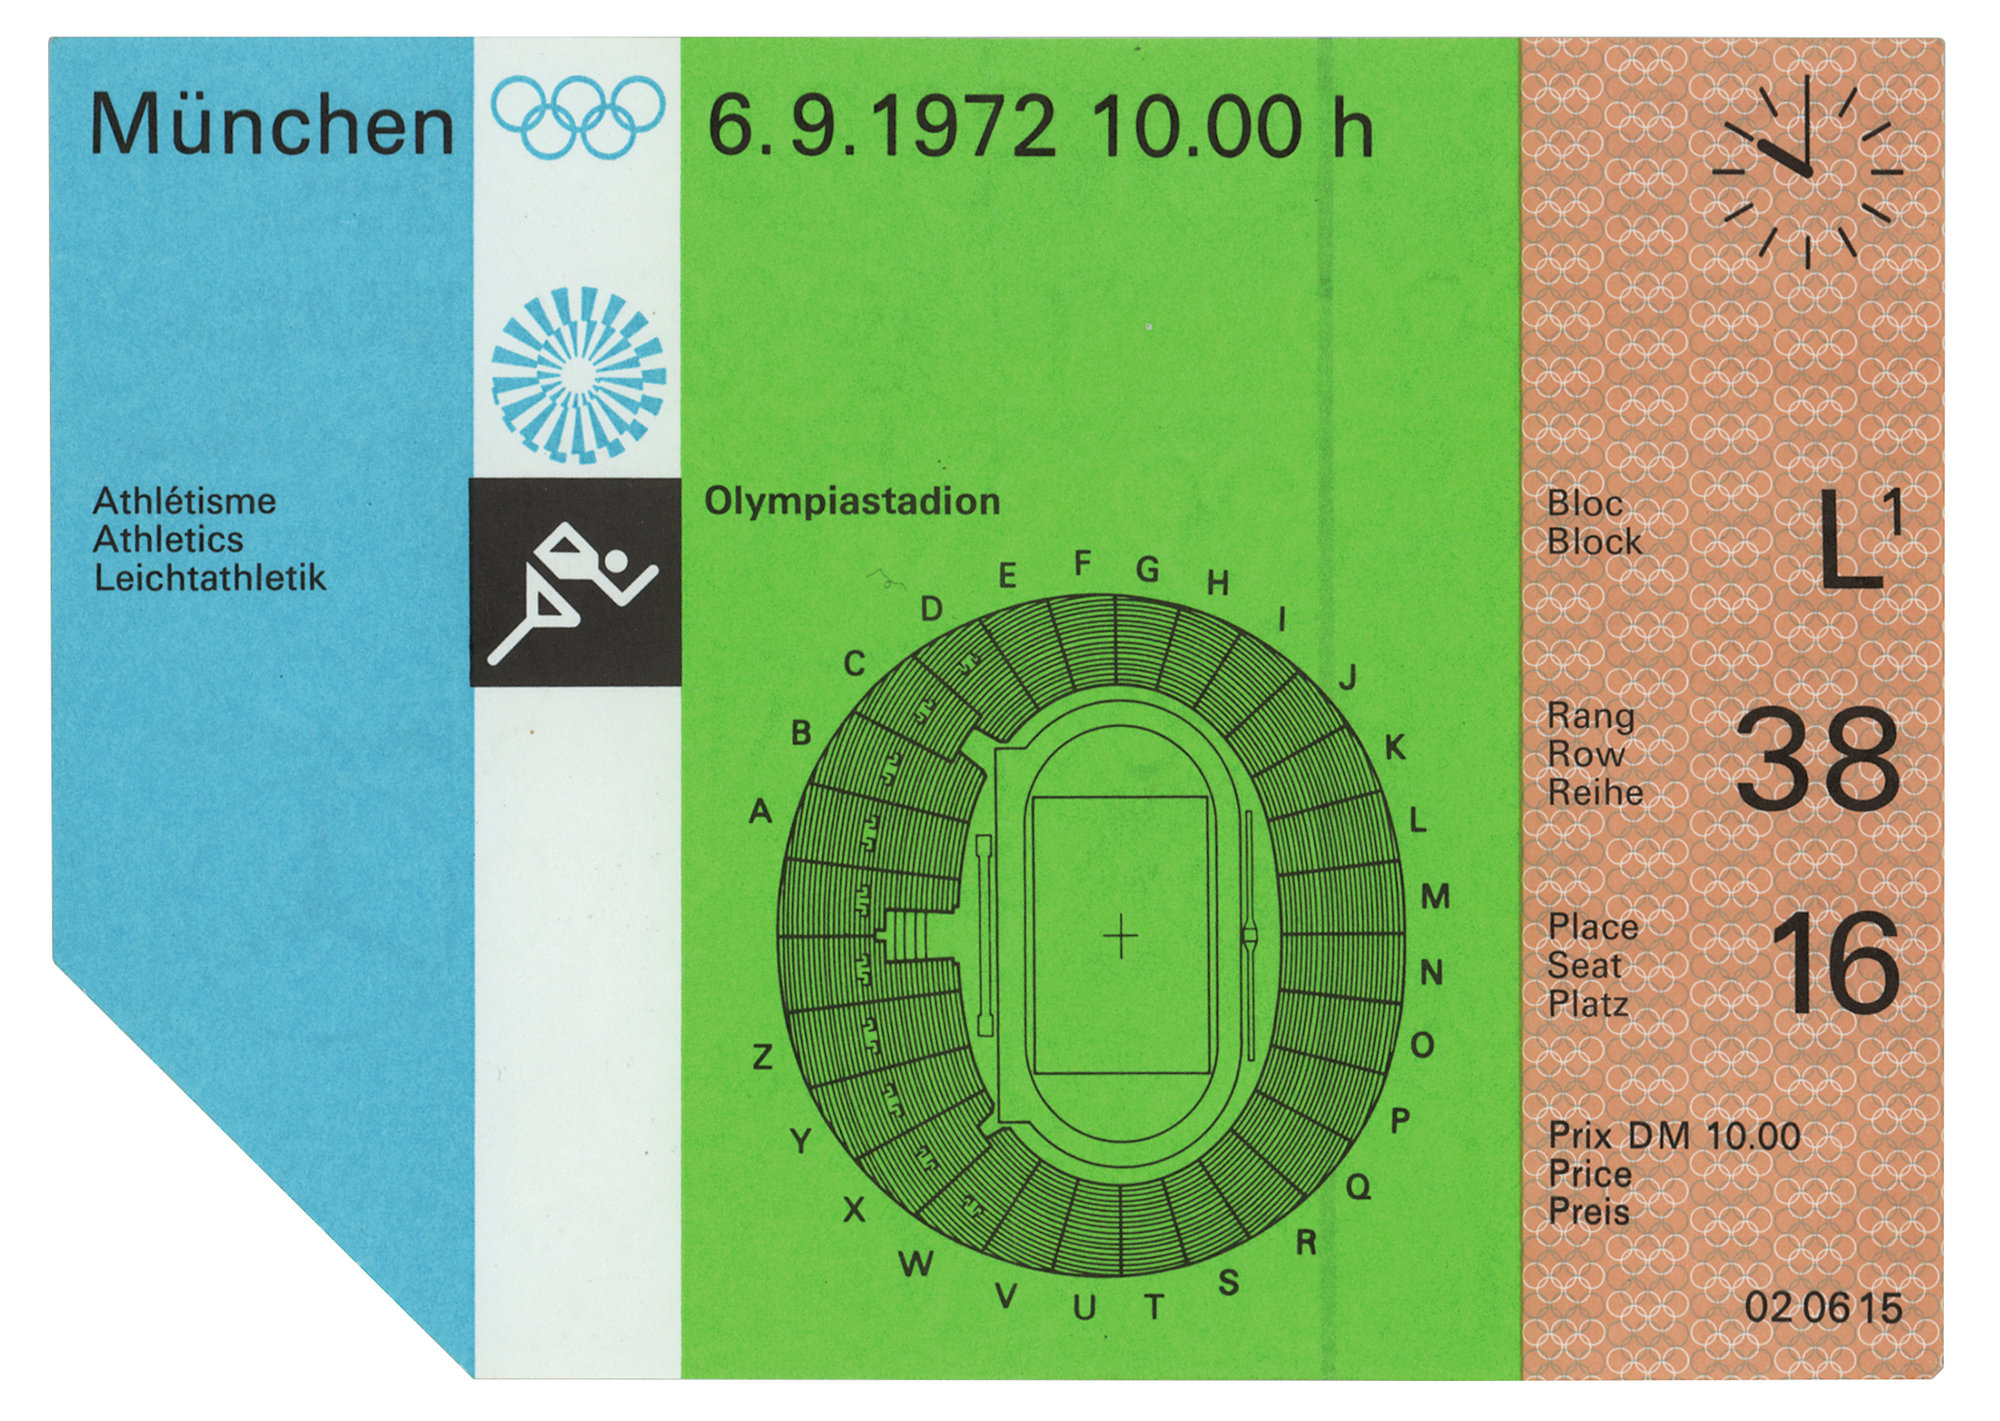 Lot #4241 Munich 1972 Summer Olympics Memorial Service Ticket